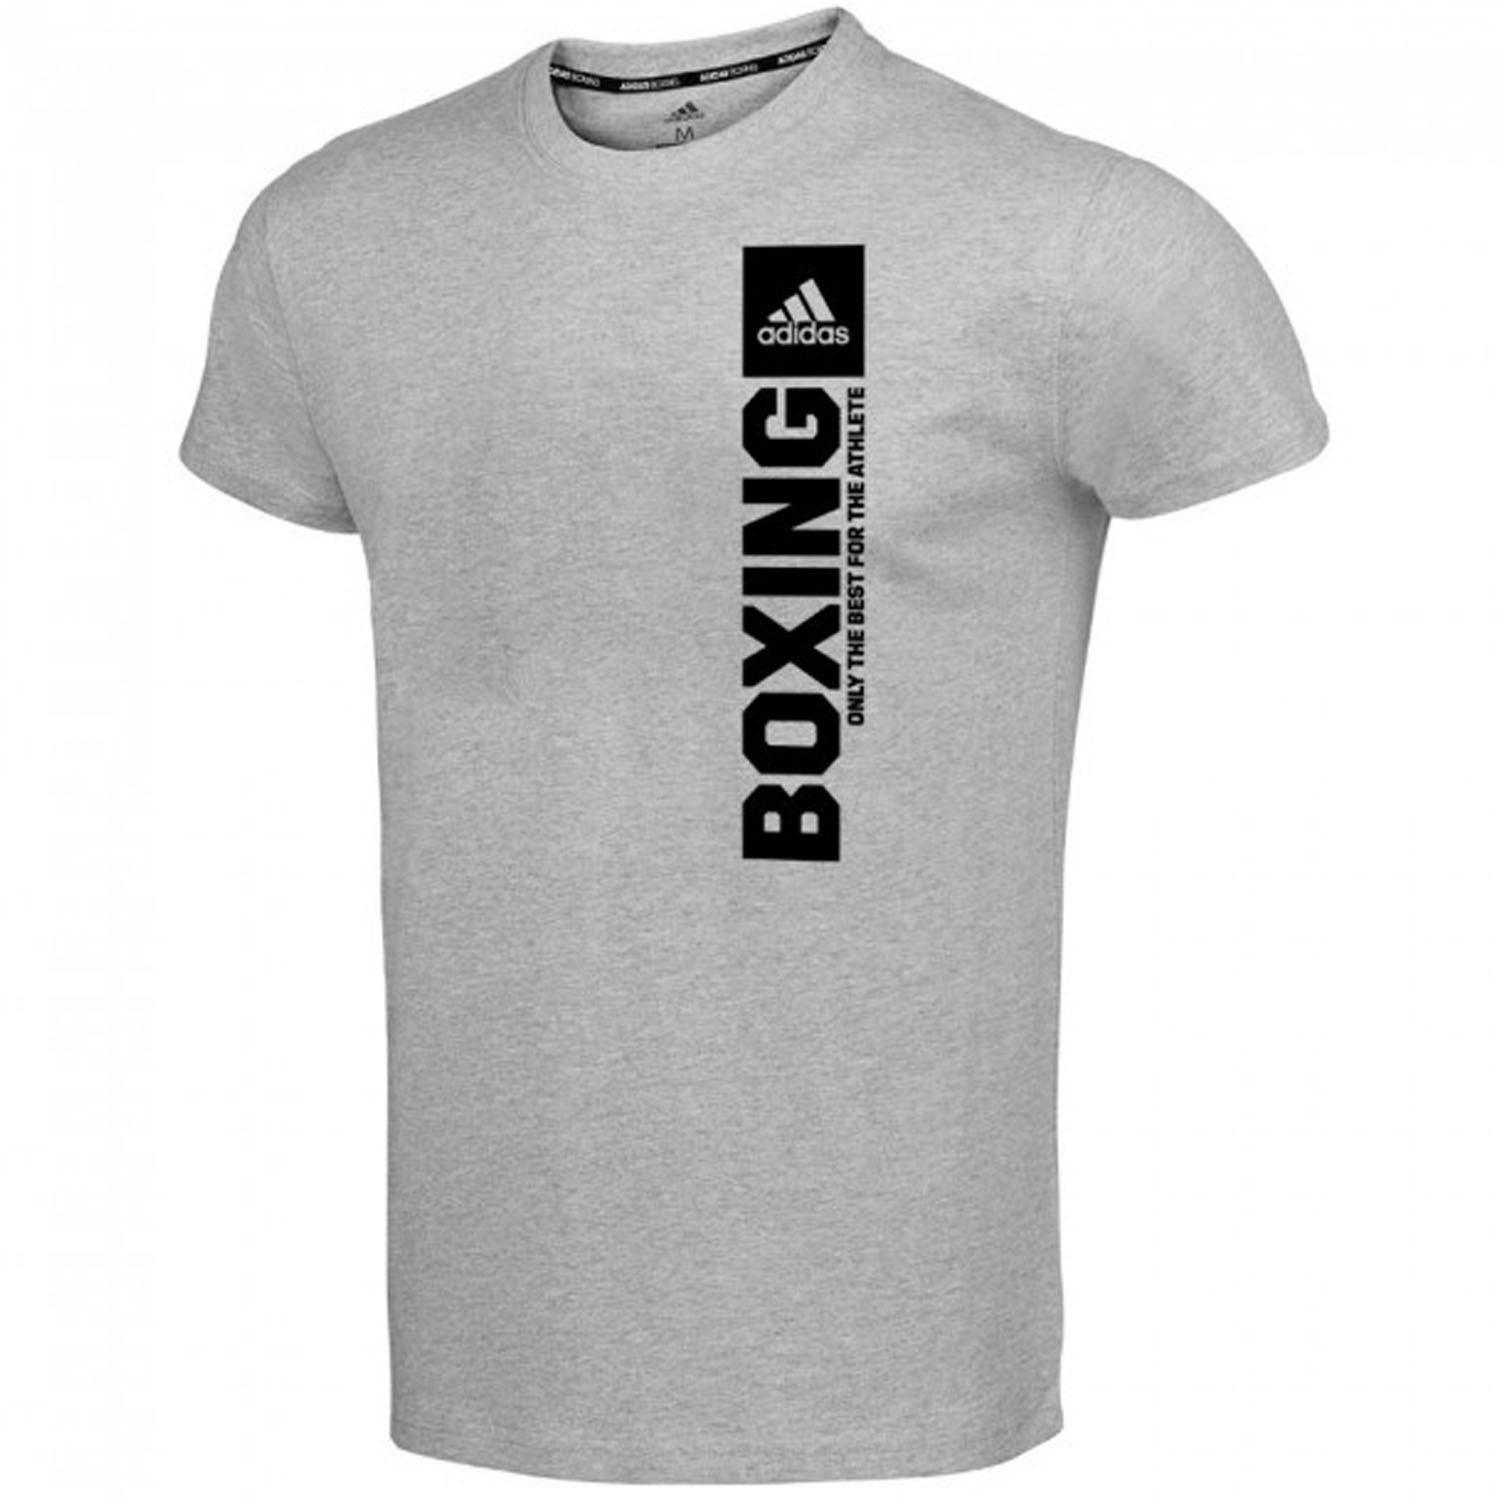 adidas T-Shirt, Community Vertical Boxing, grau, XL